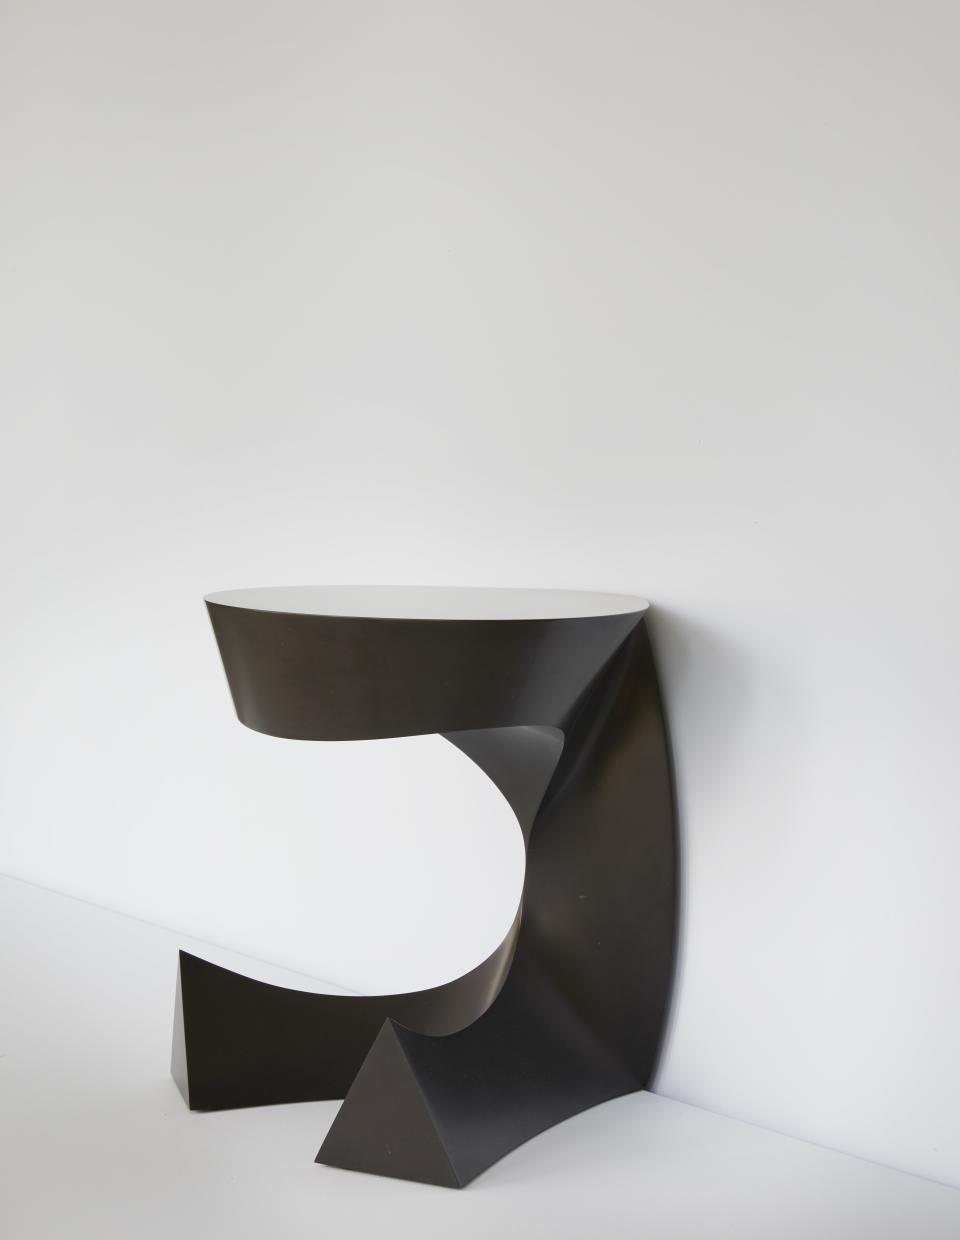 Bakker's Sitting Table is made out of Noir Belge de Mazy marble.